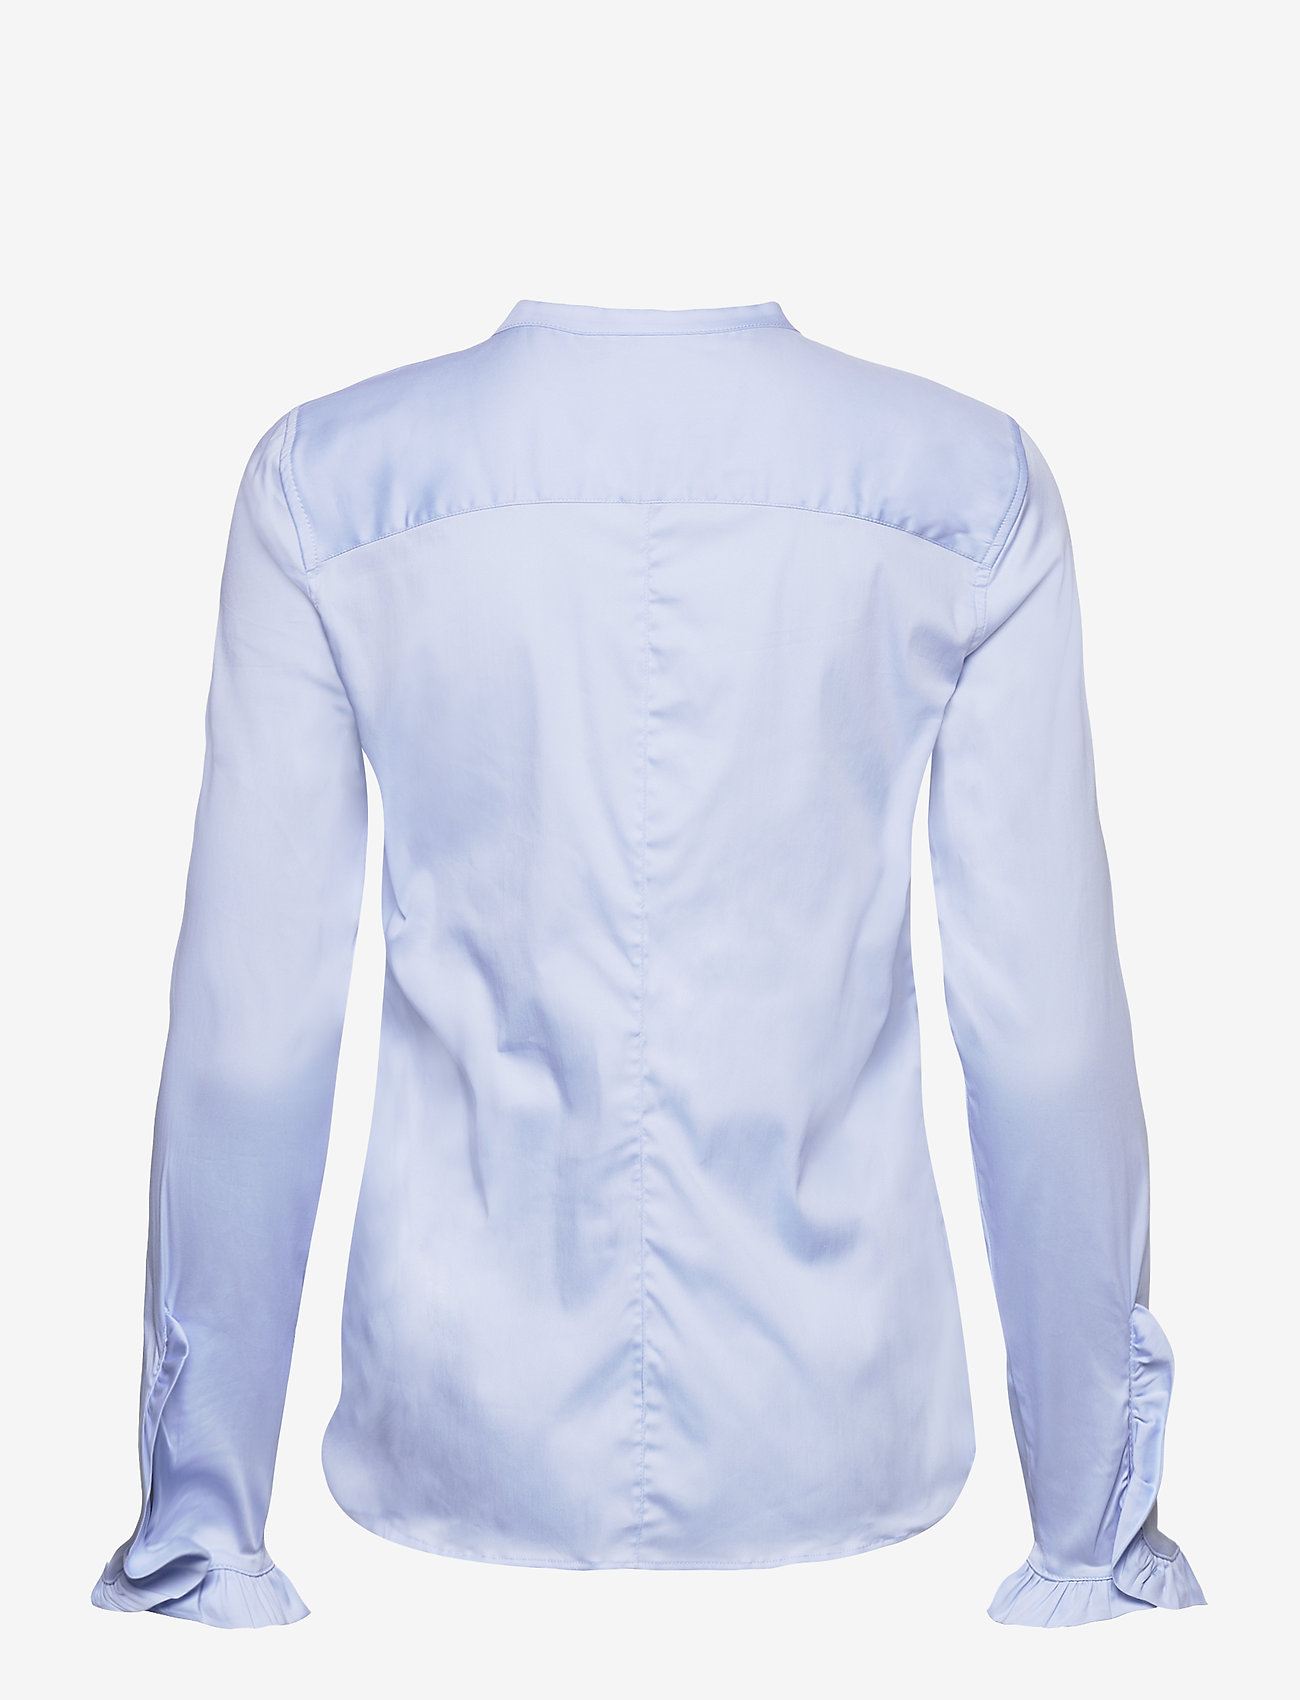 MOS MOSH - Mattie Shirt - blouses met lange mouwen - light blue - 1